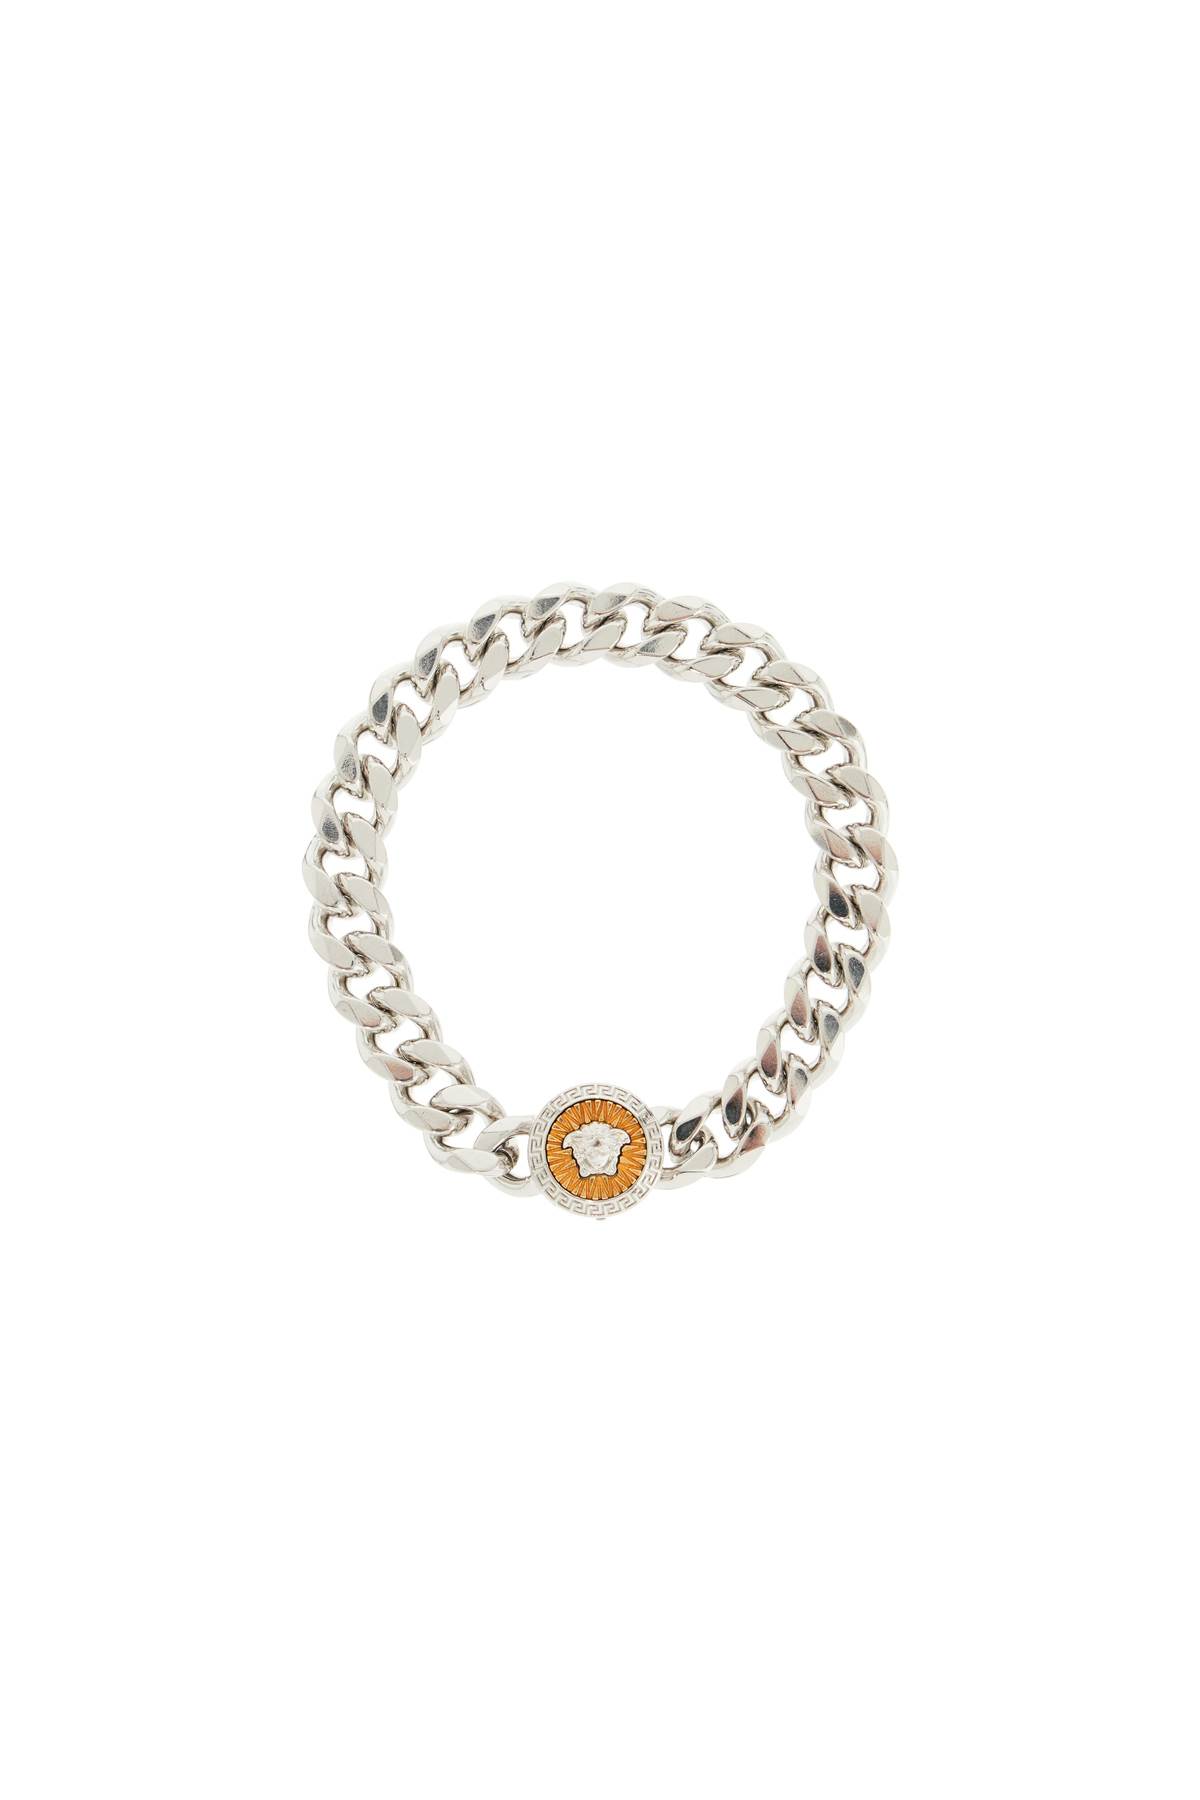 chain Bracelet With Medusa Charm